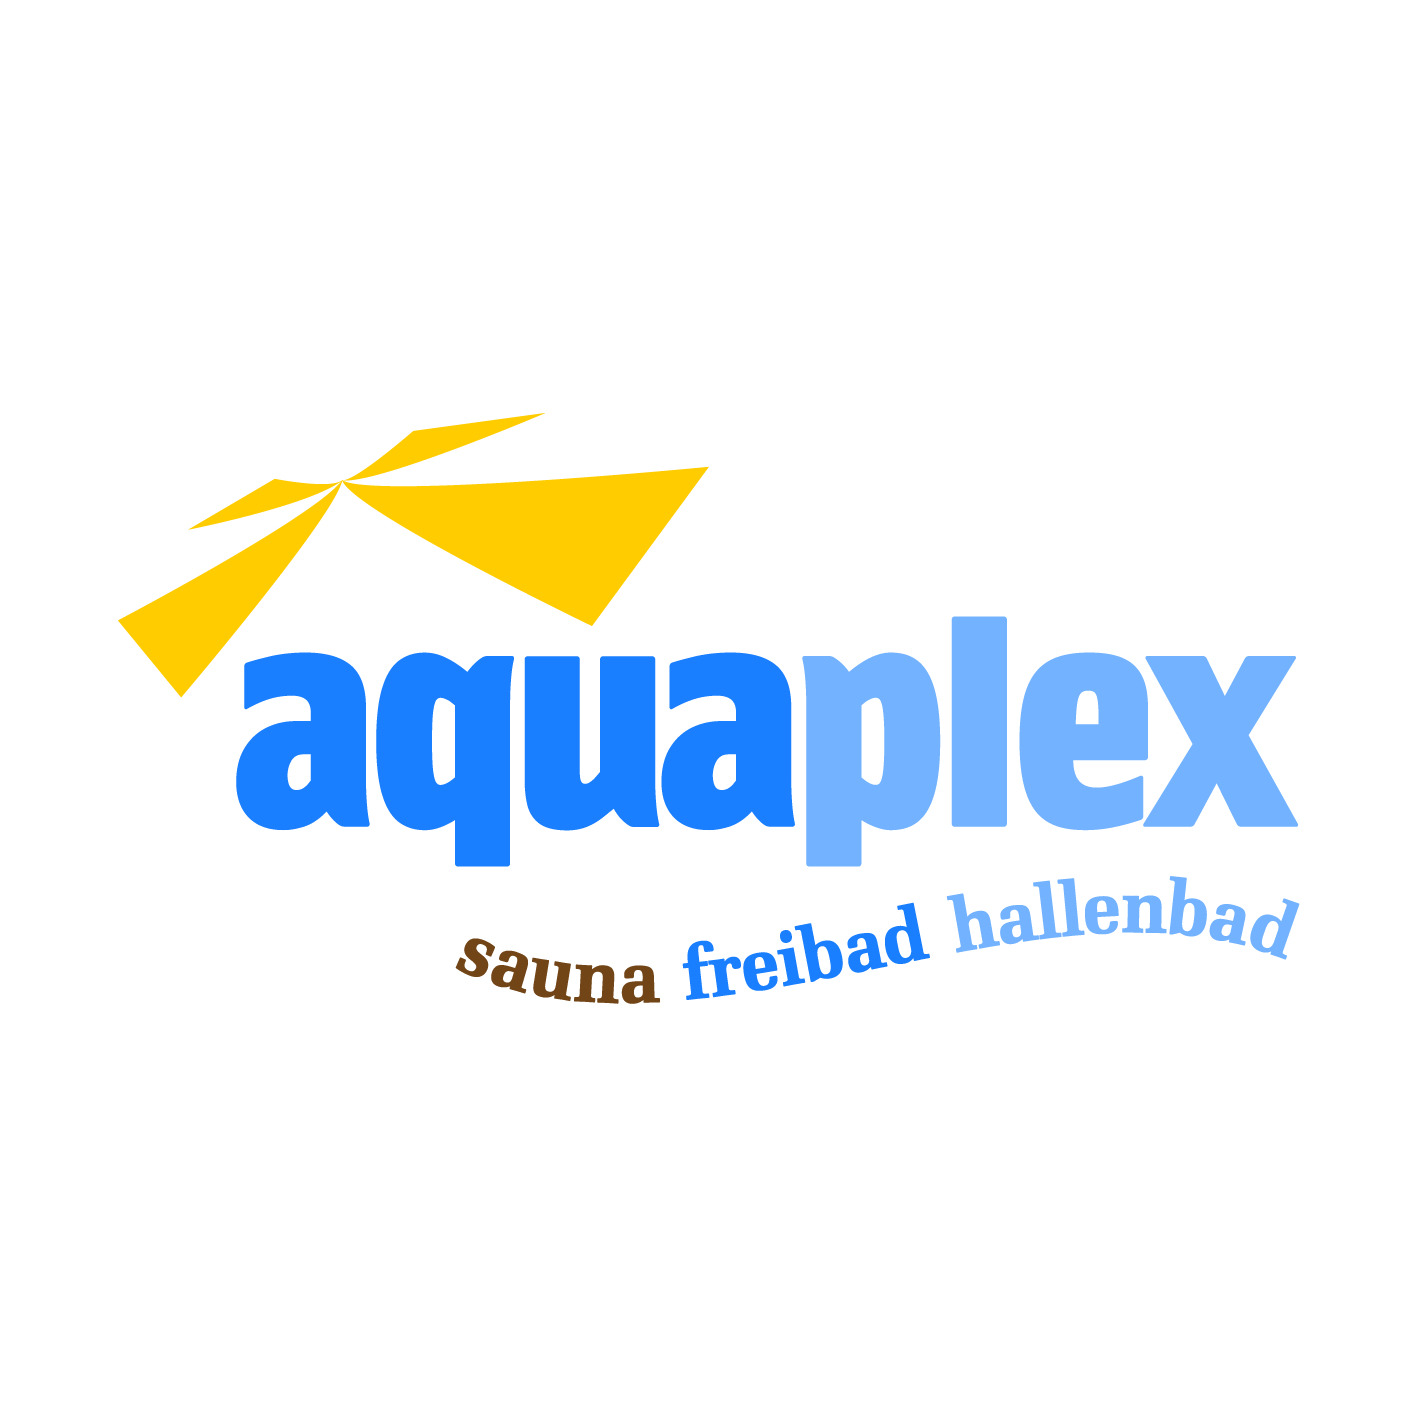 Logo aquaplex Eisenach